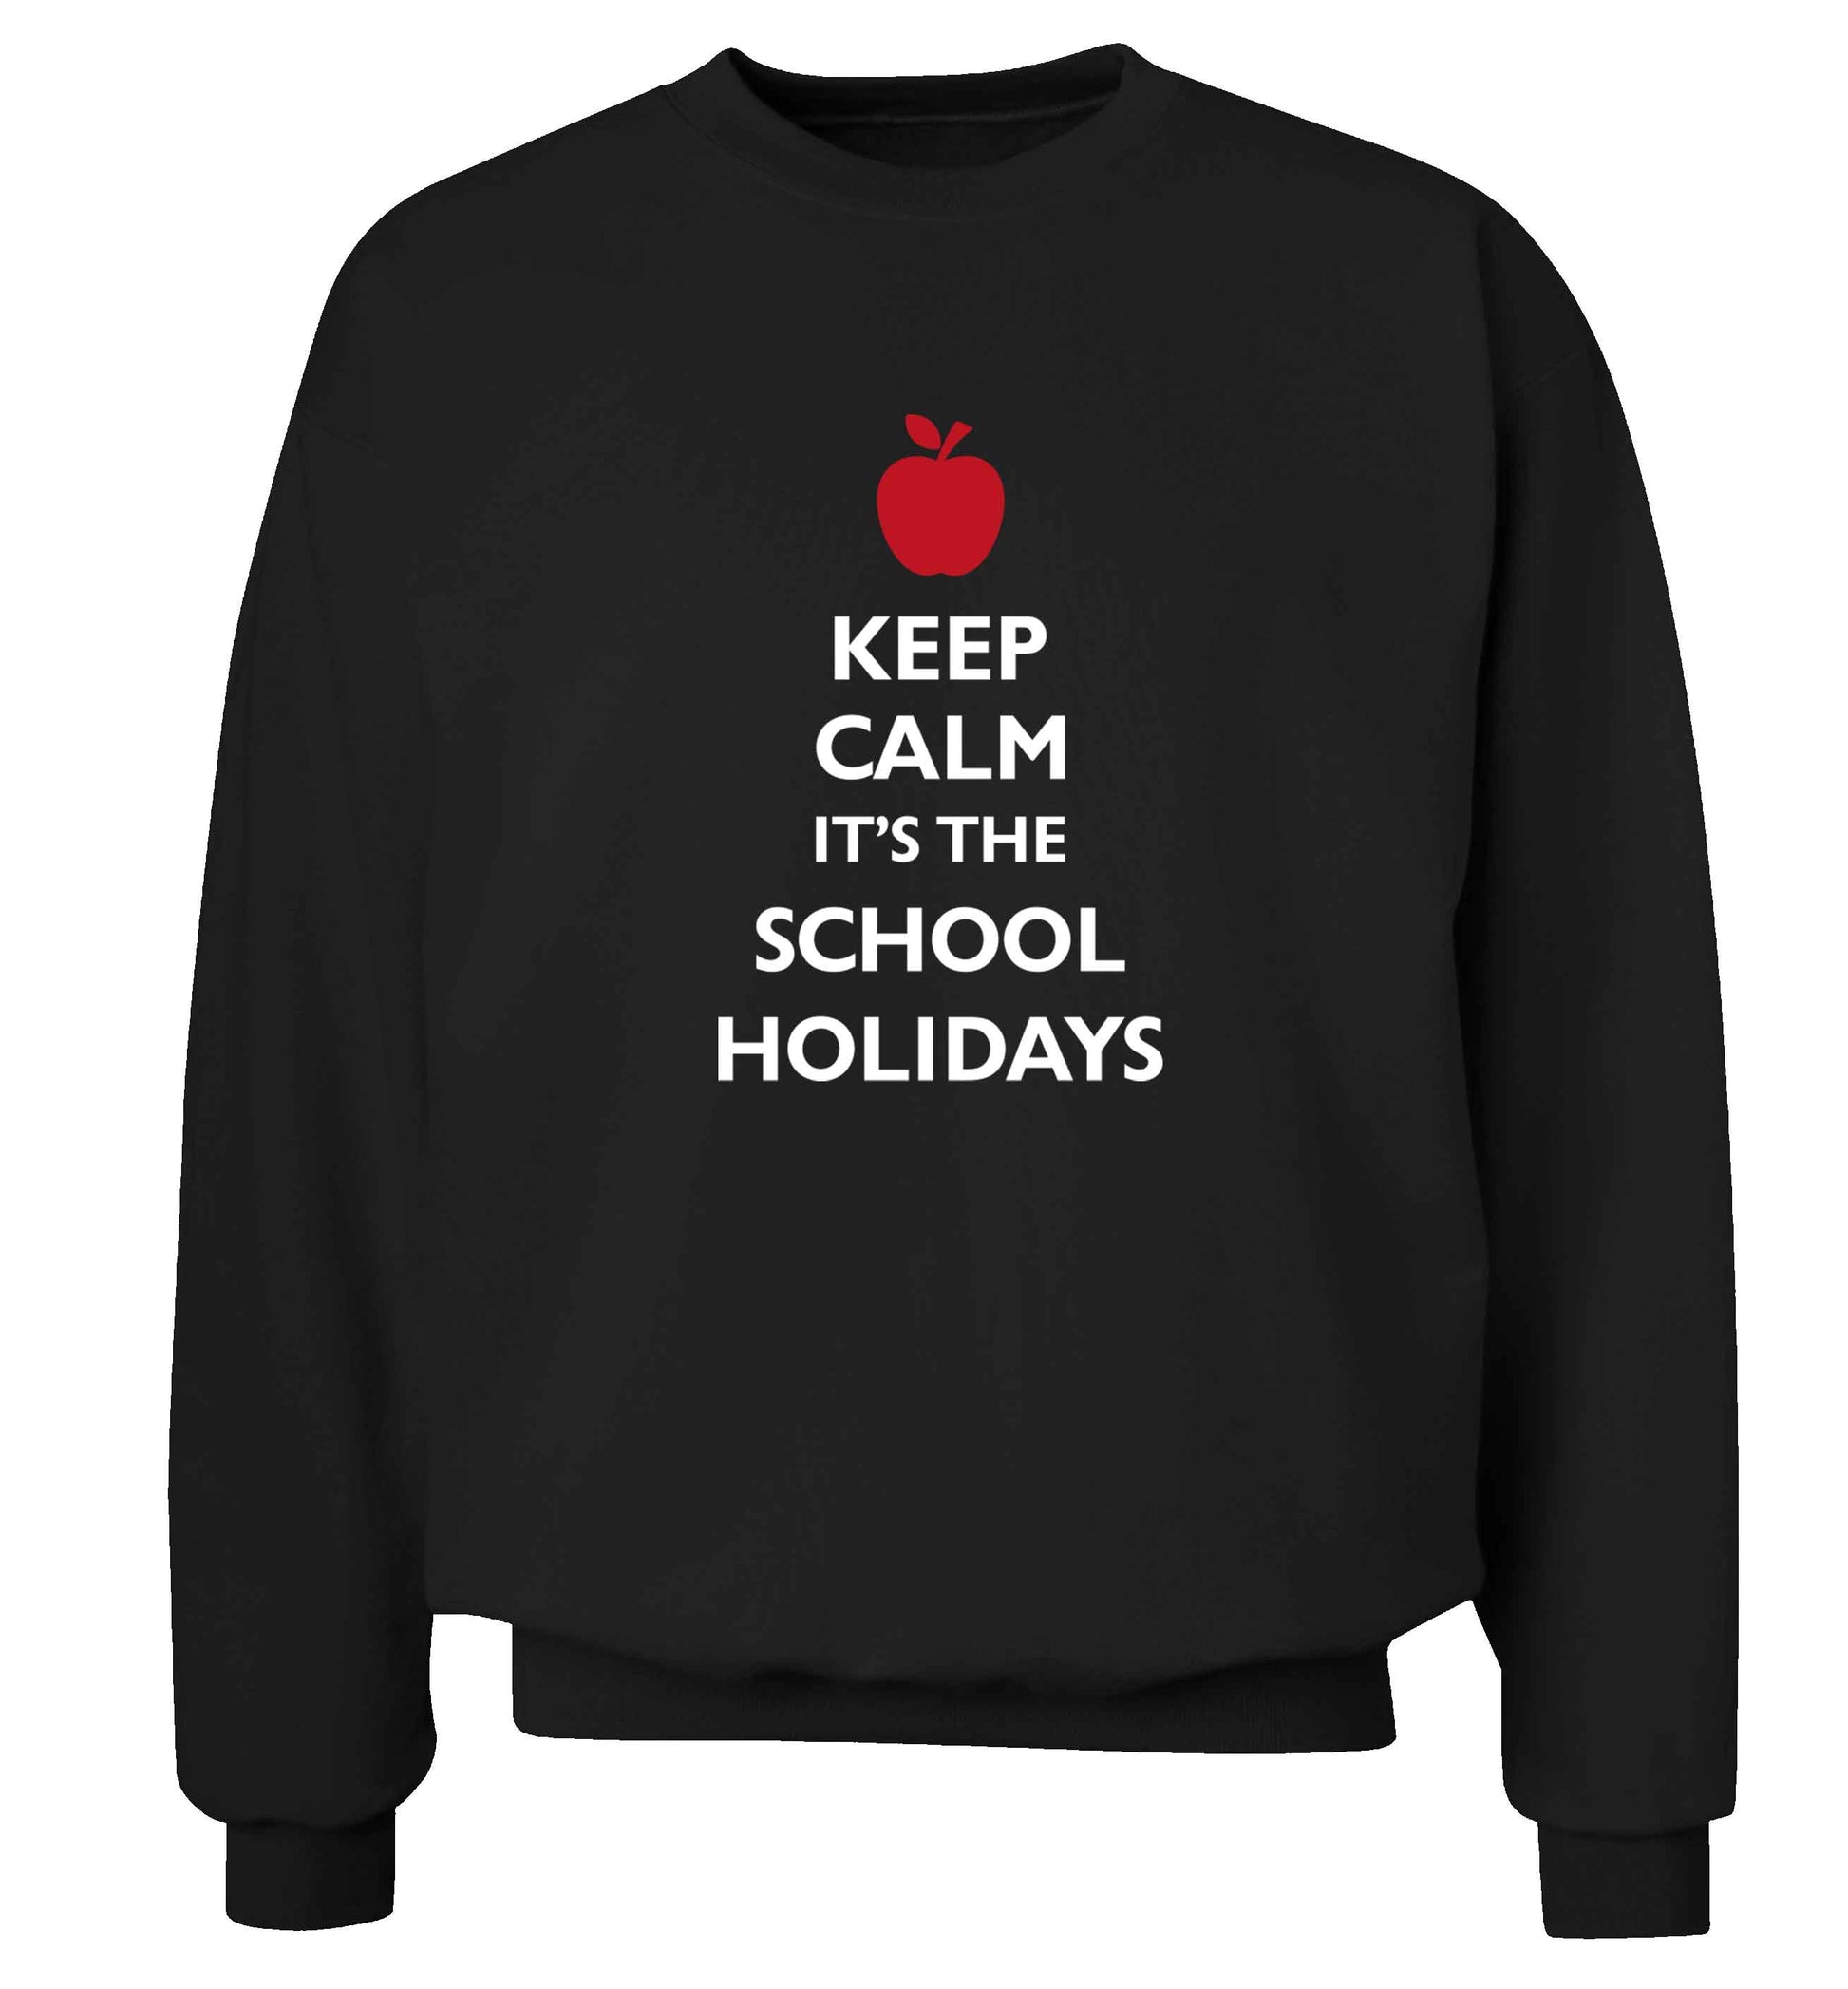 Keep calm it's the school holidays adult's unisex black sweater 2XL